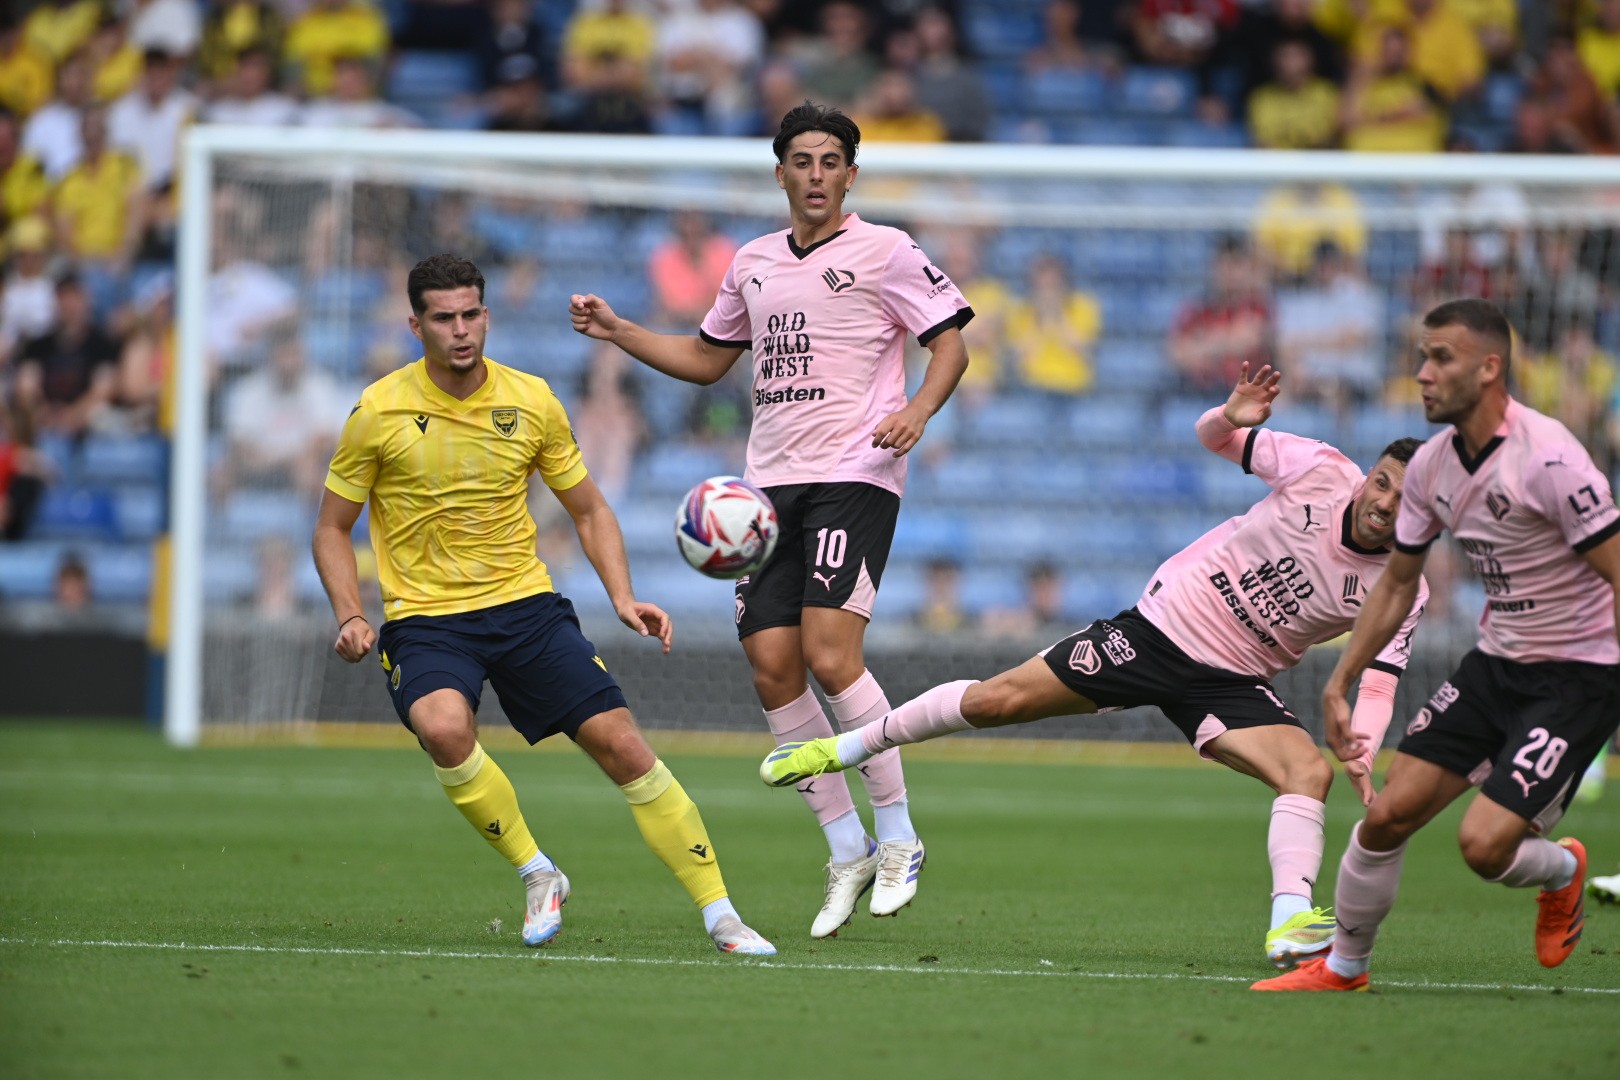 Serie B side Palermo beat Oxford United in pre-season friendly